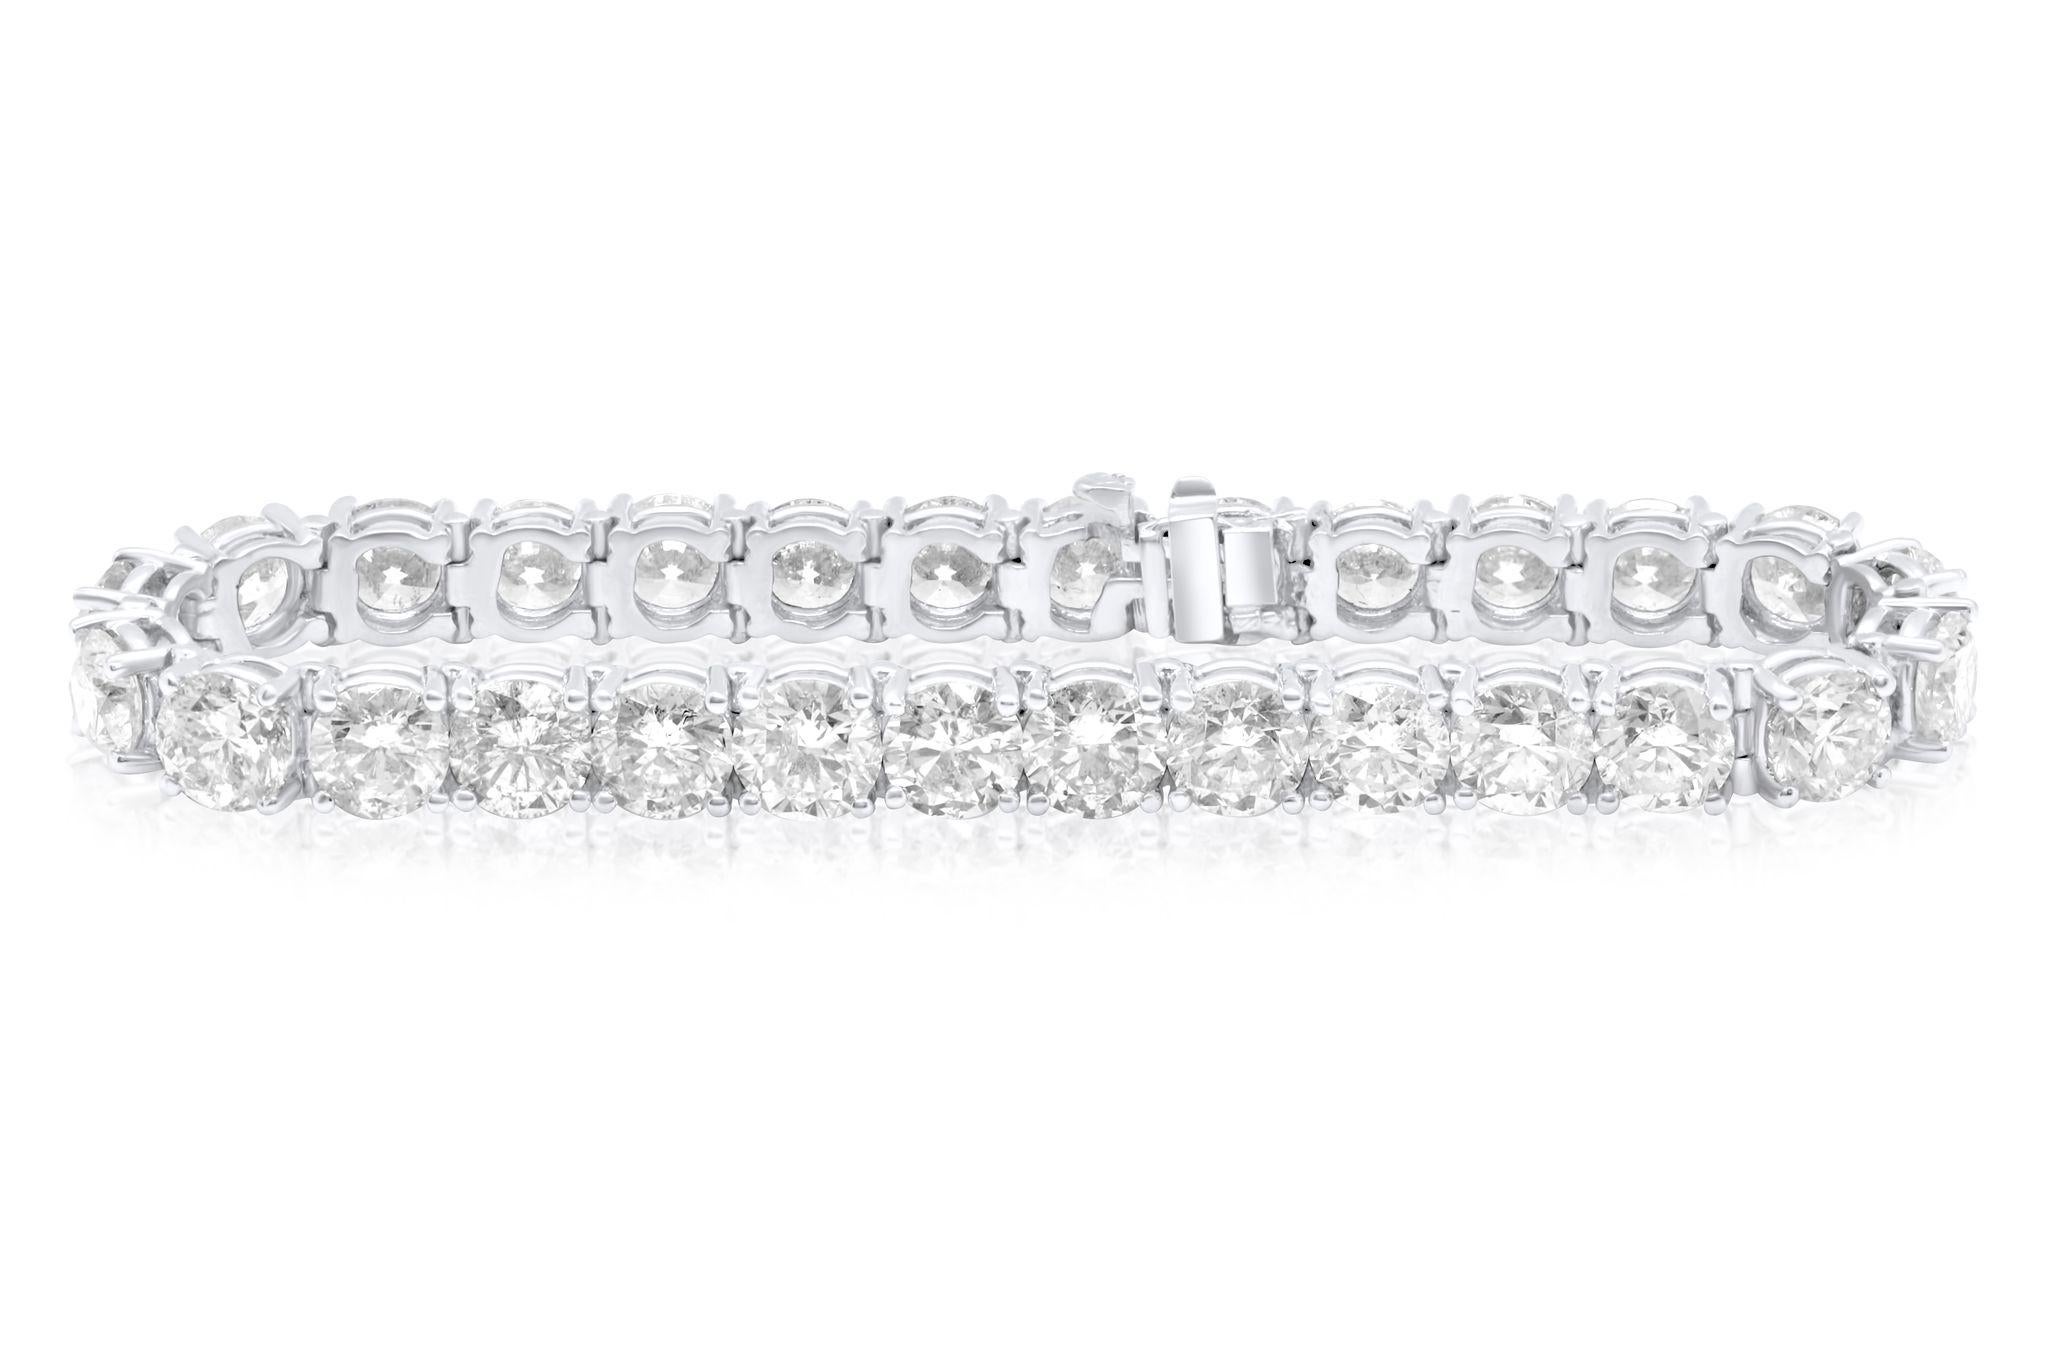 18 kt white gold 4 prong diamond tennis bracelet  15.00 cts tw of round diamonds 0.41 each carat.
